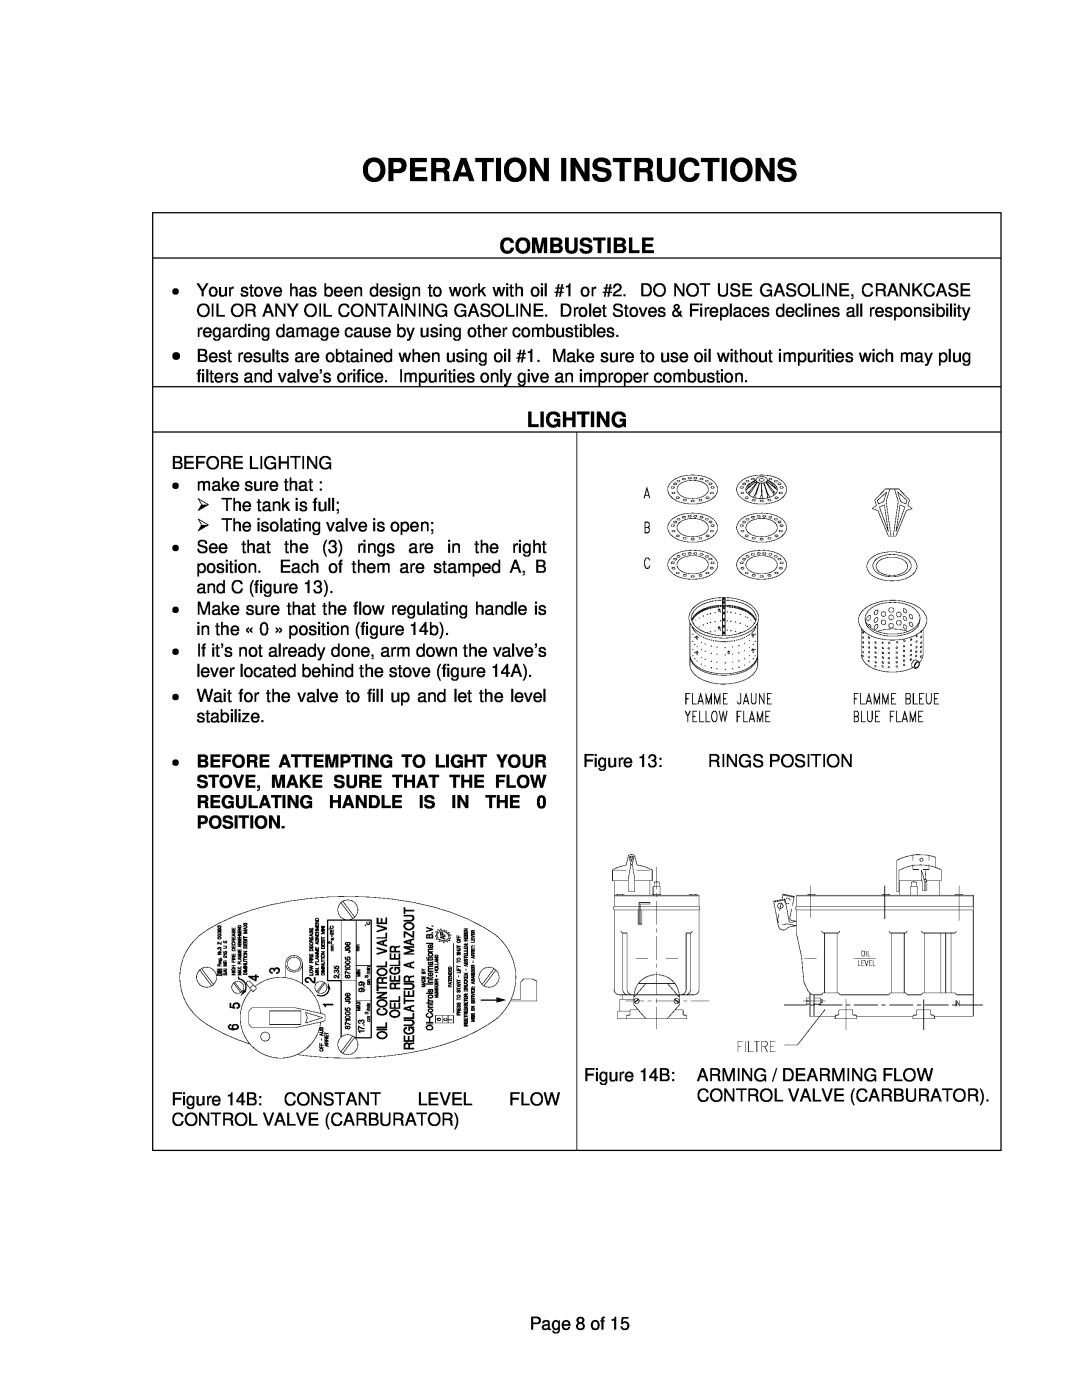 Drolet ALASKA 2000 manual Operation Instructions, Combustible, Lighting 